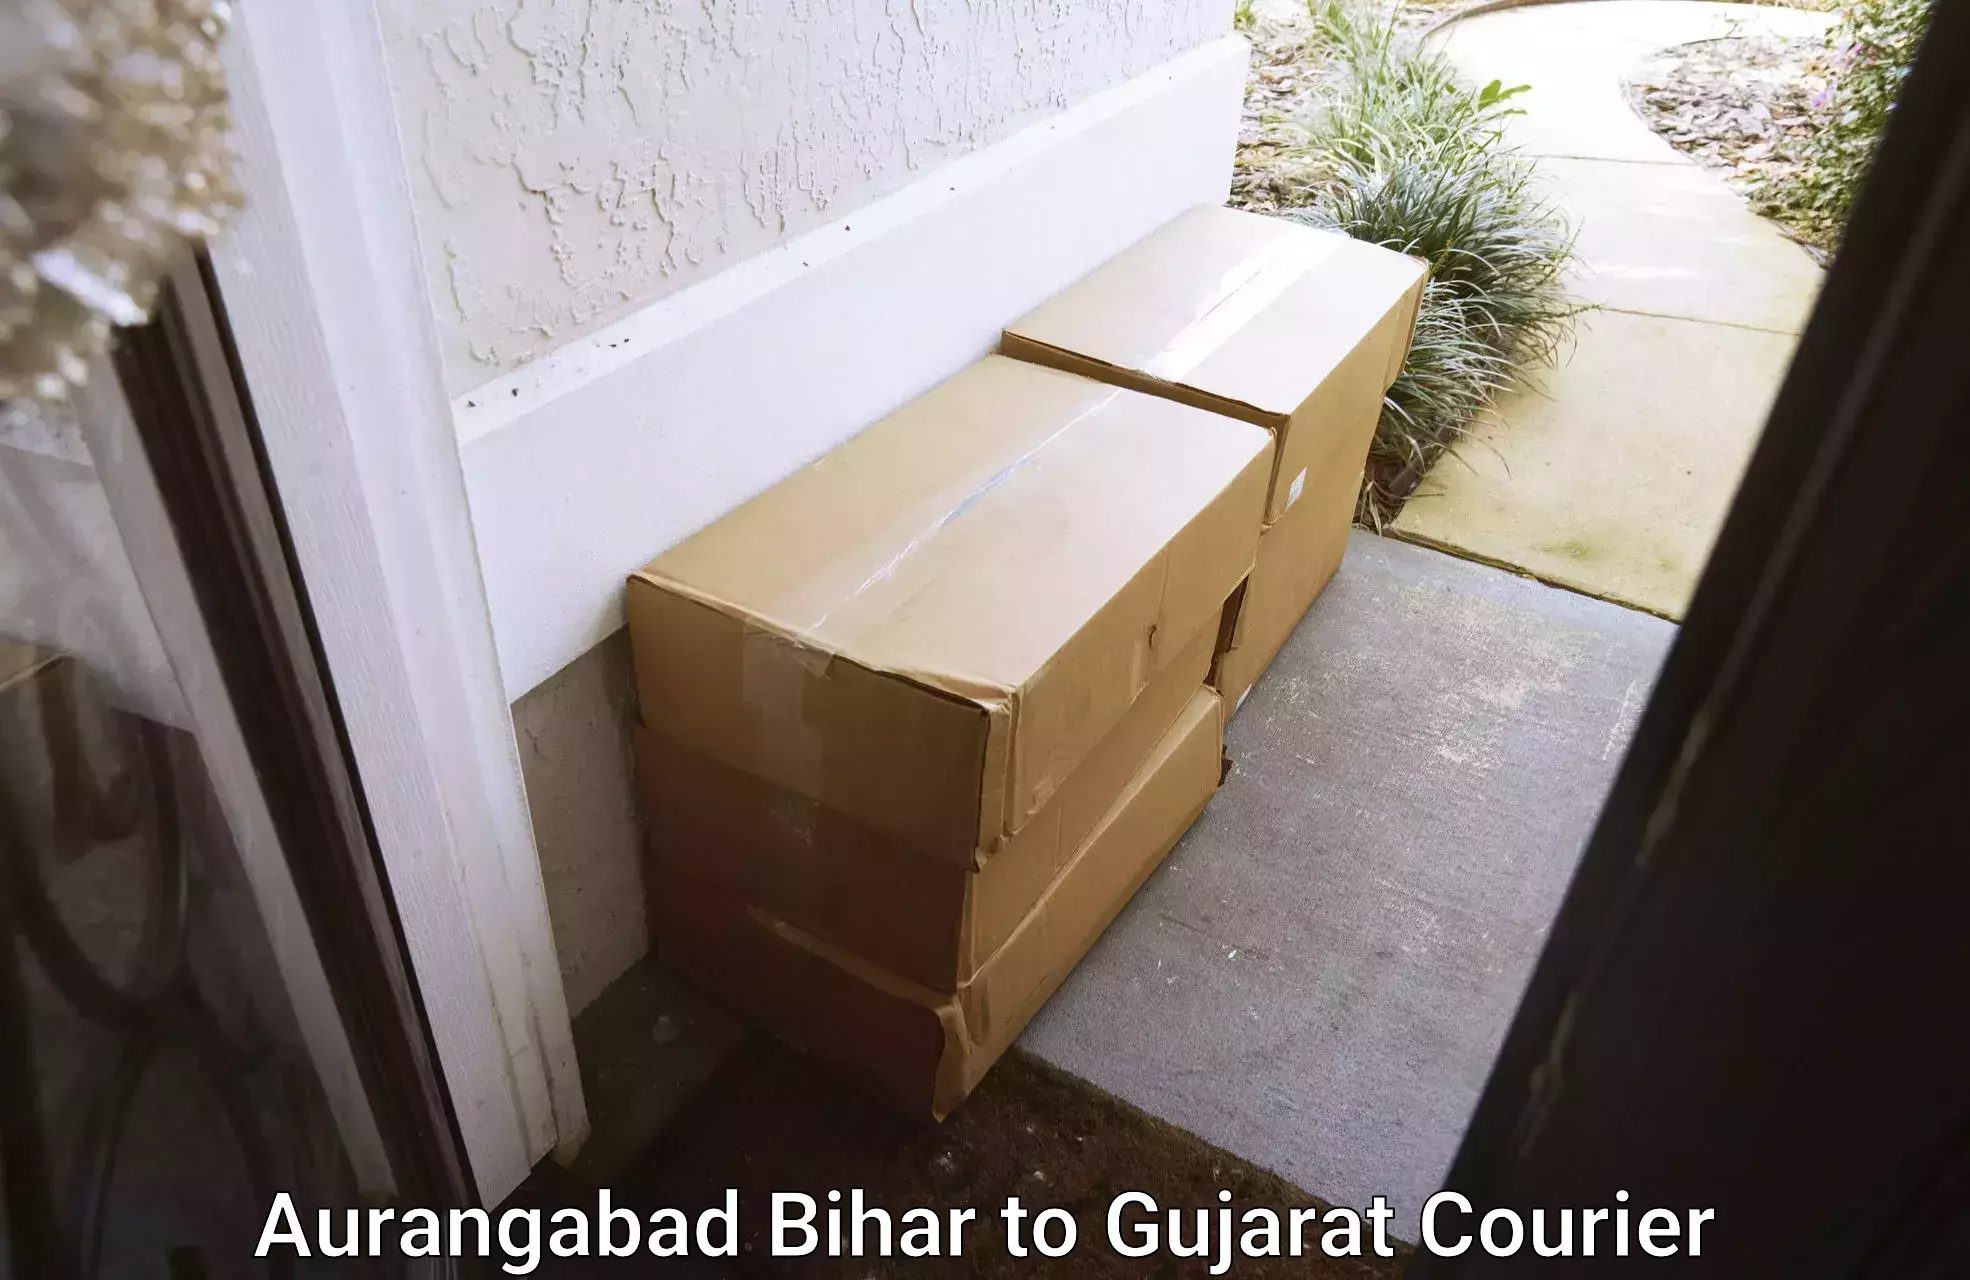 High-quality moving services Aurangabad Bihar to GIDC